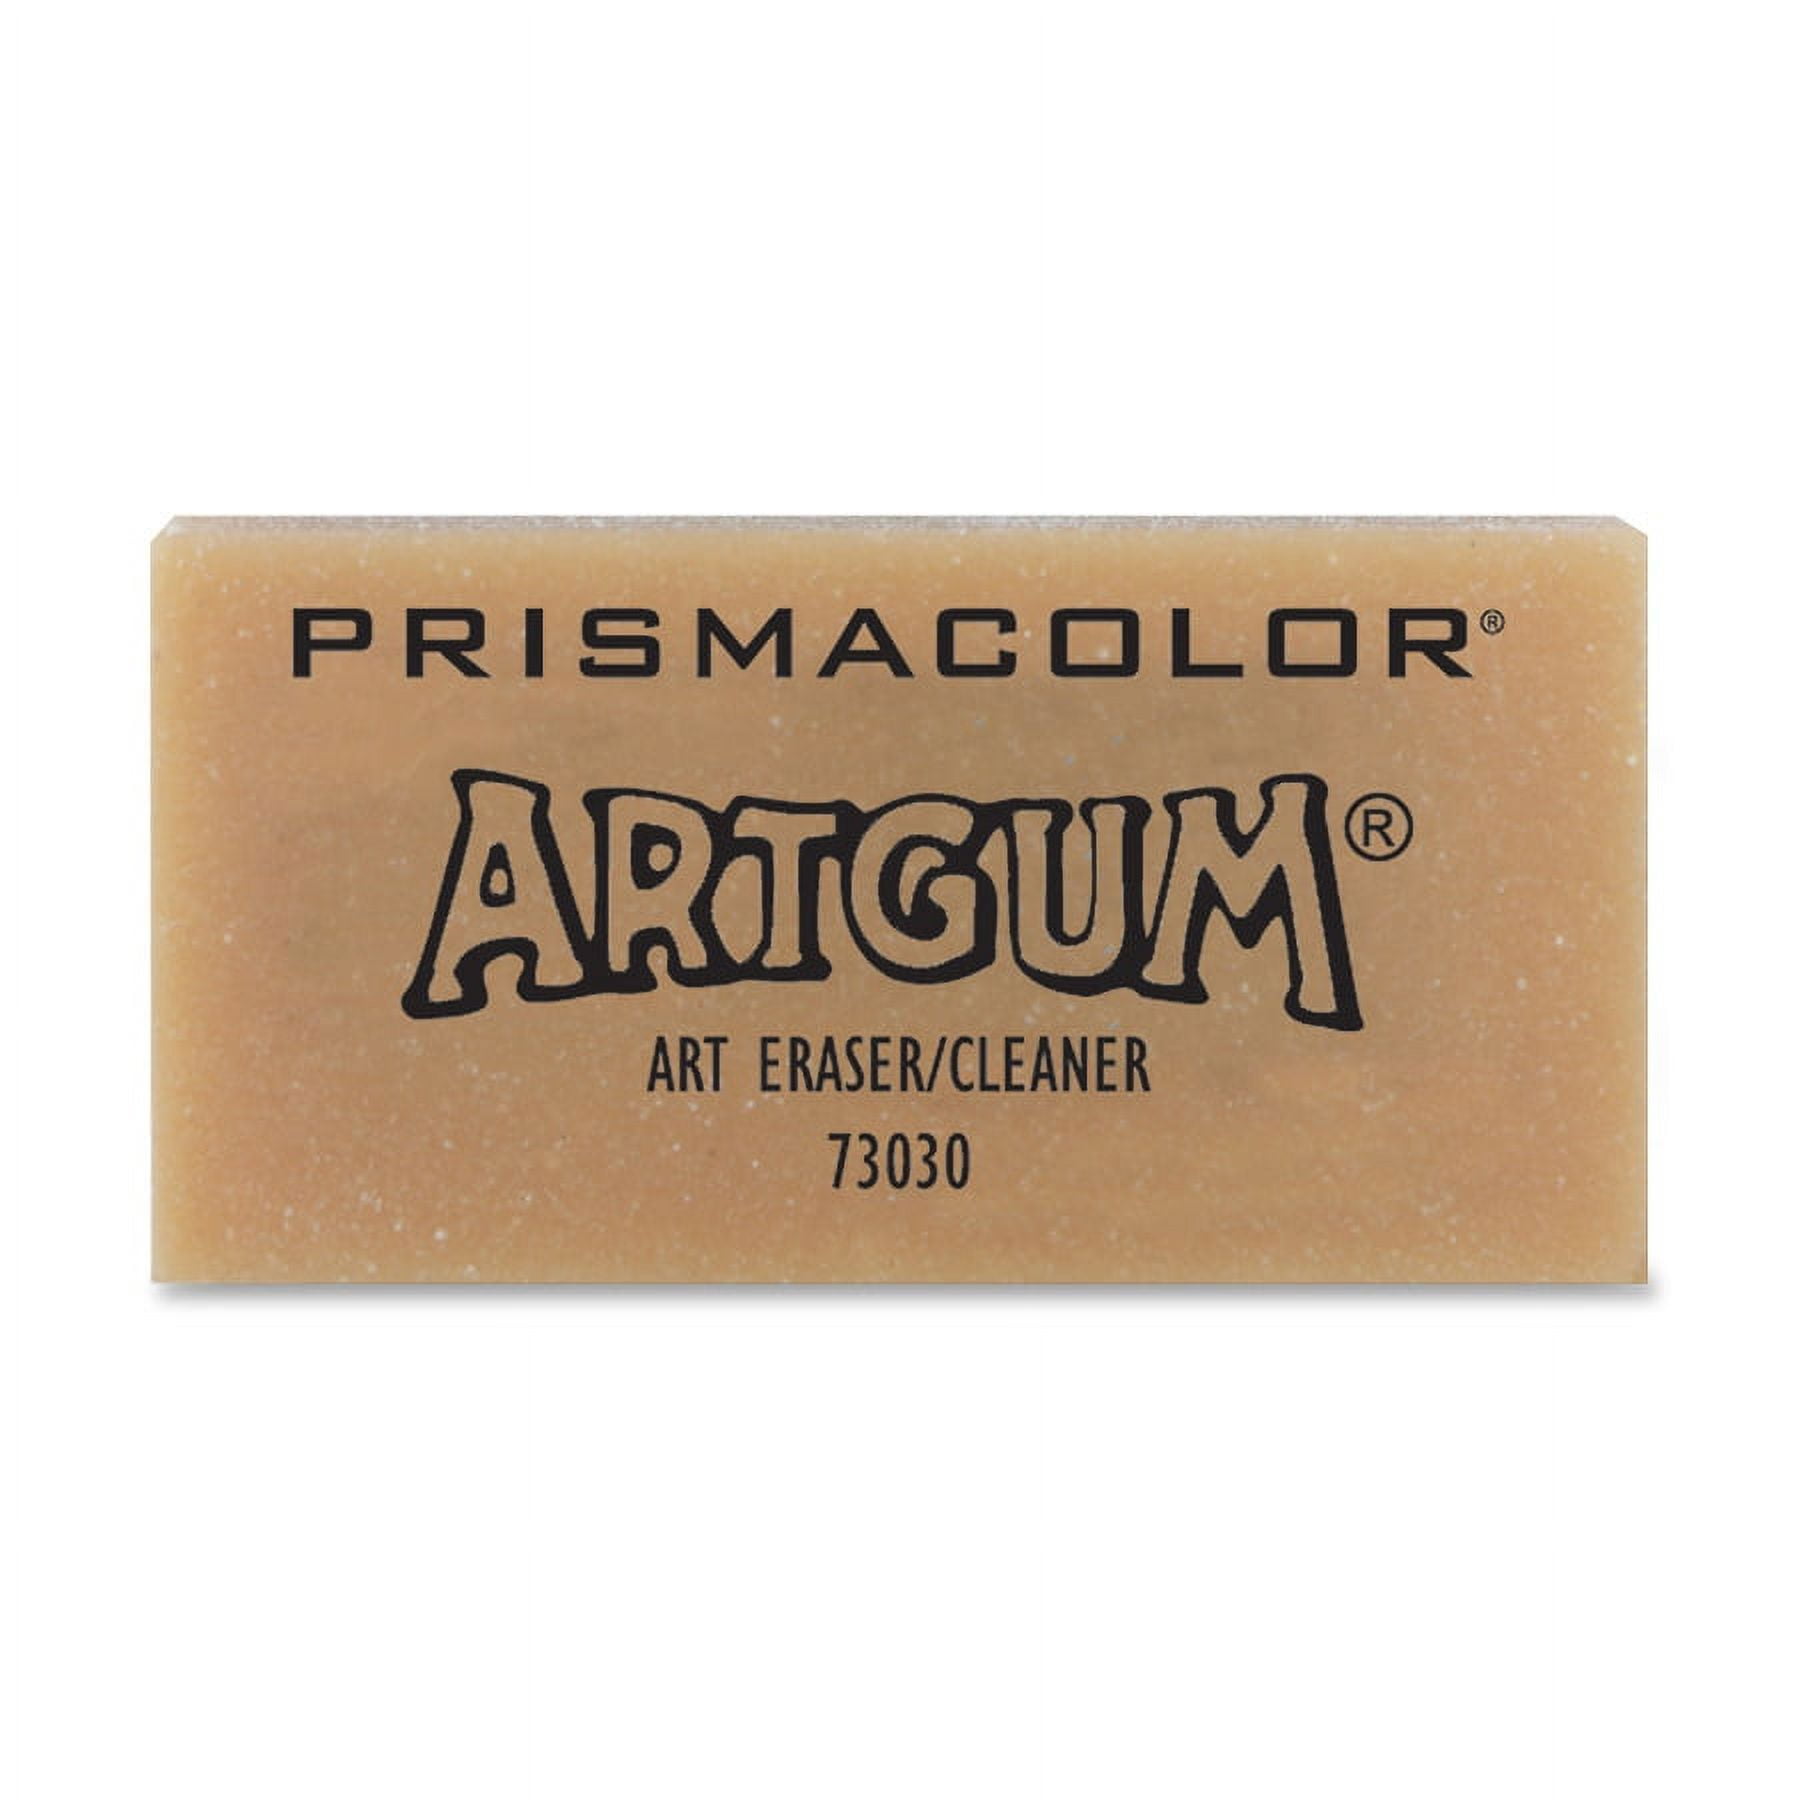 Prismacolor ArtGum Eraser